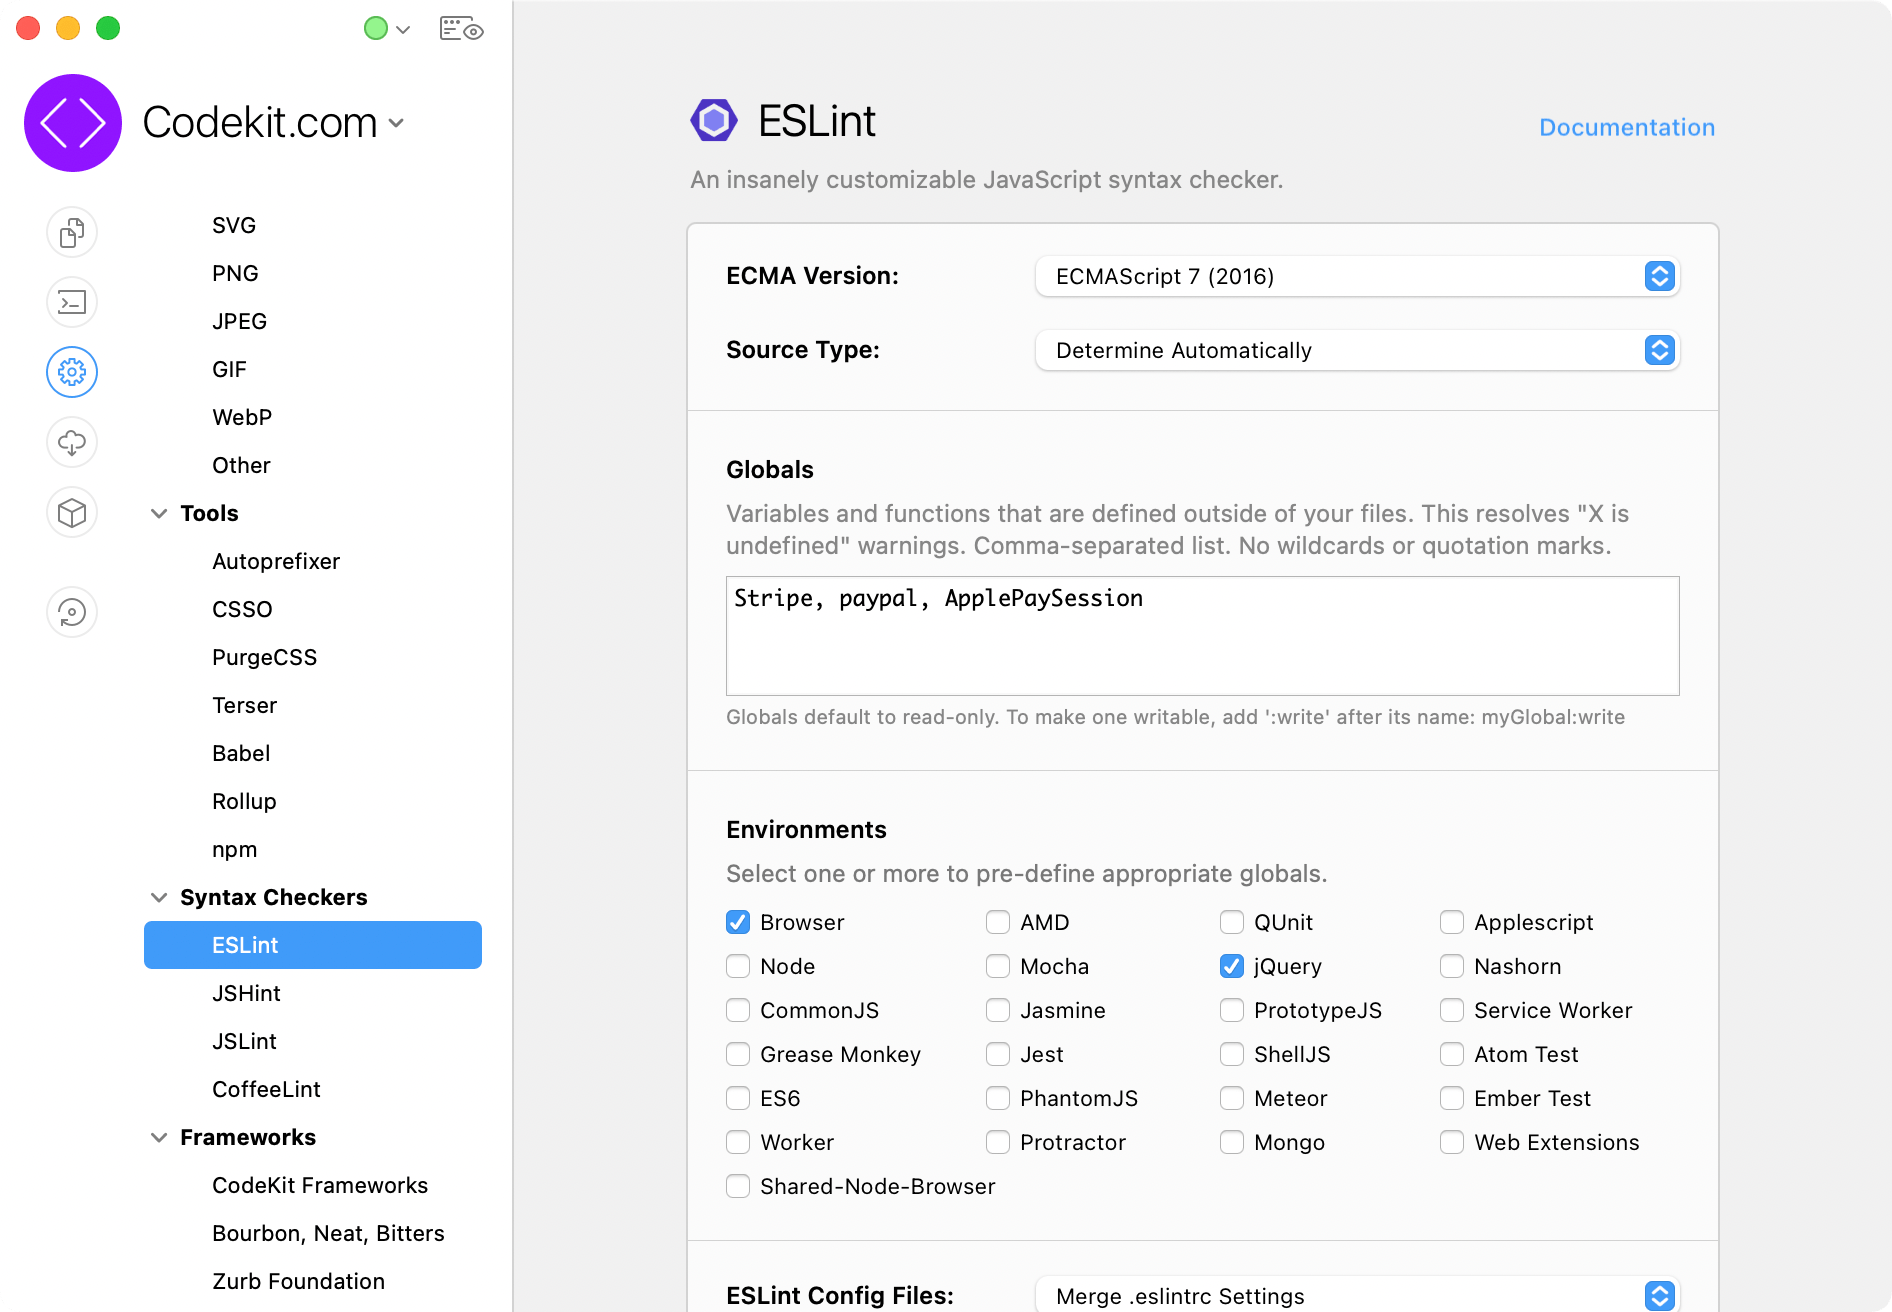 A screenshot of the CodeKit app window showing ESLint settings.